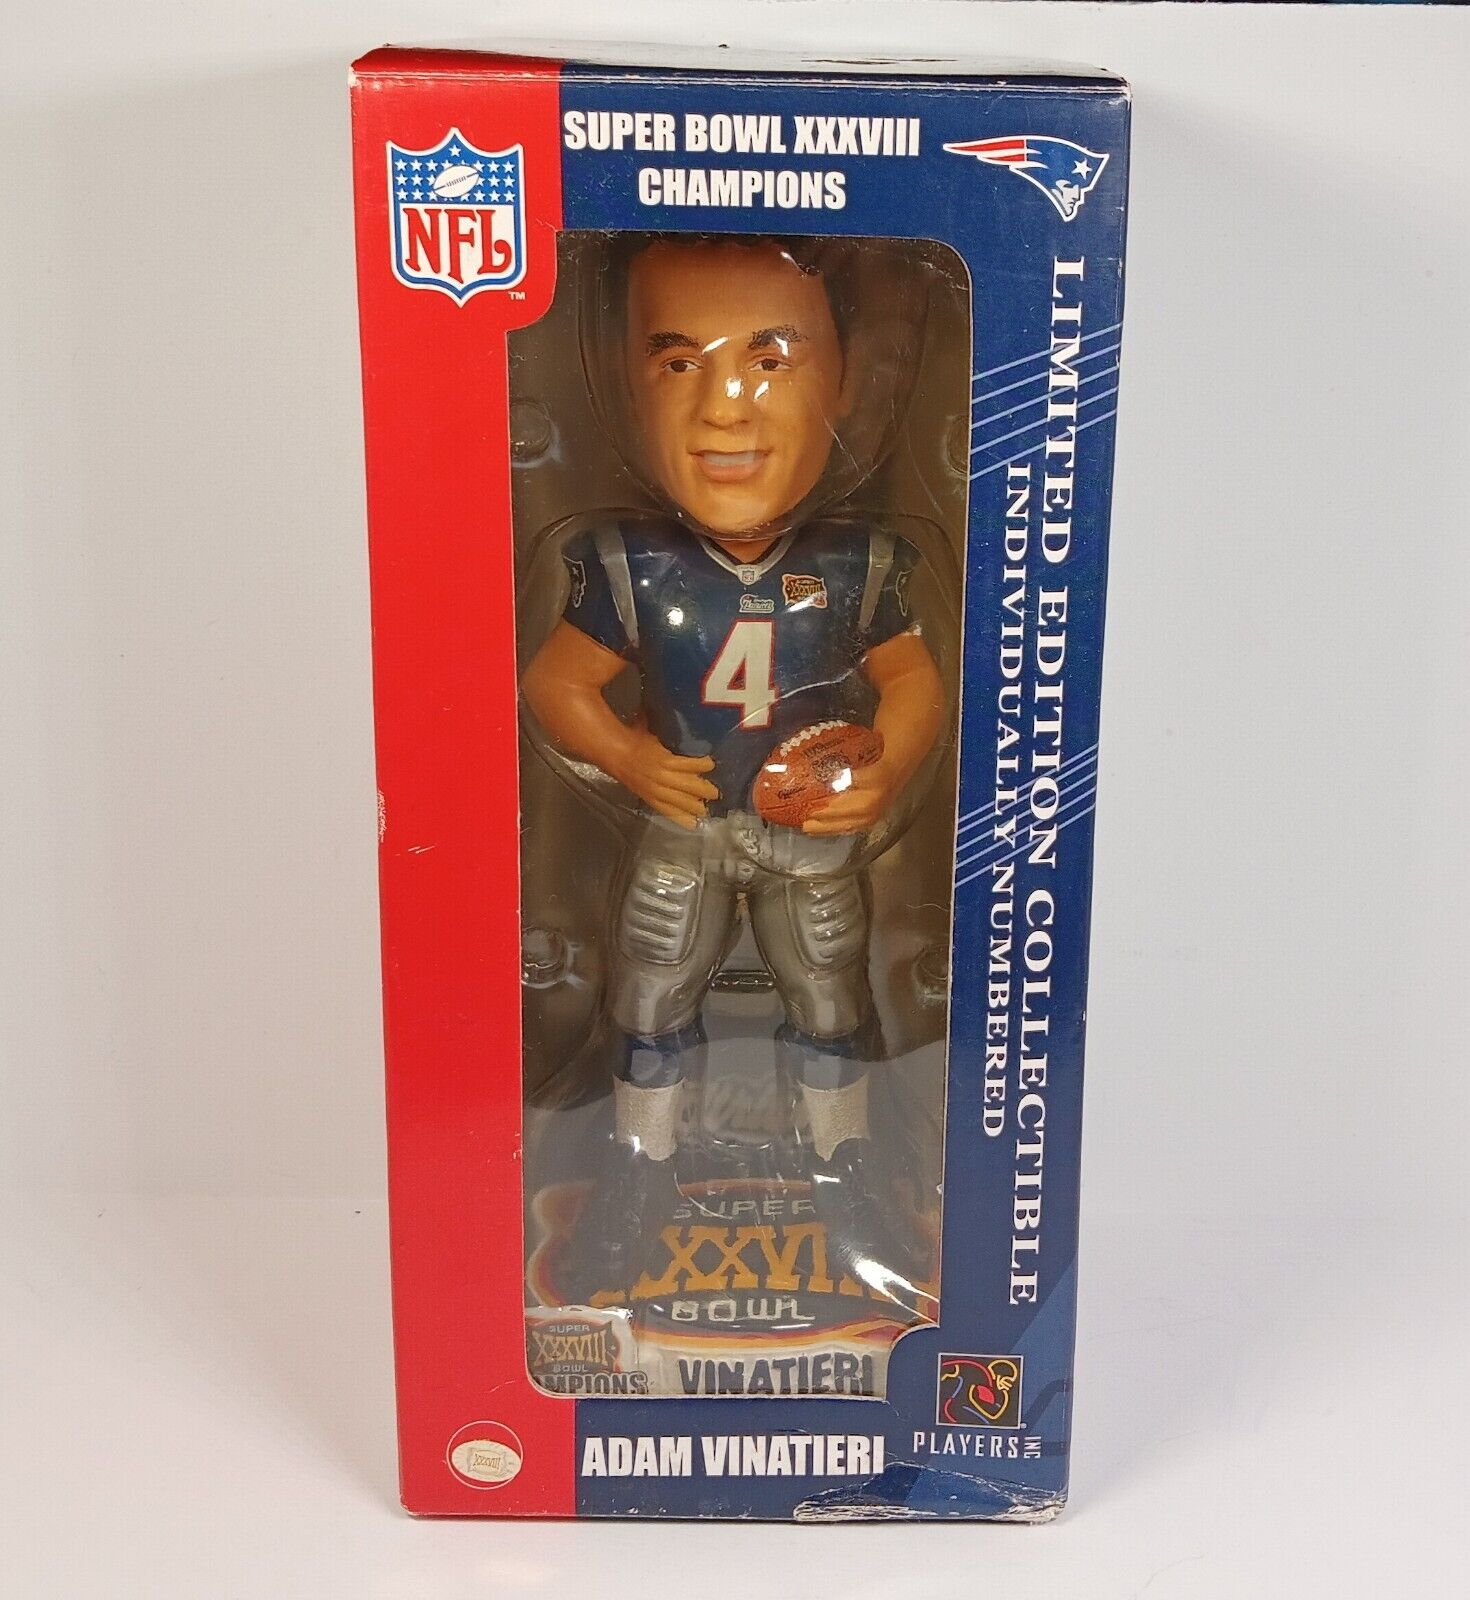 ADAM VINATIERI NFL Super Bowl 38 New England Patriots Limited Edition Bobblehead